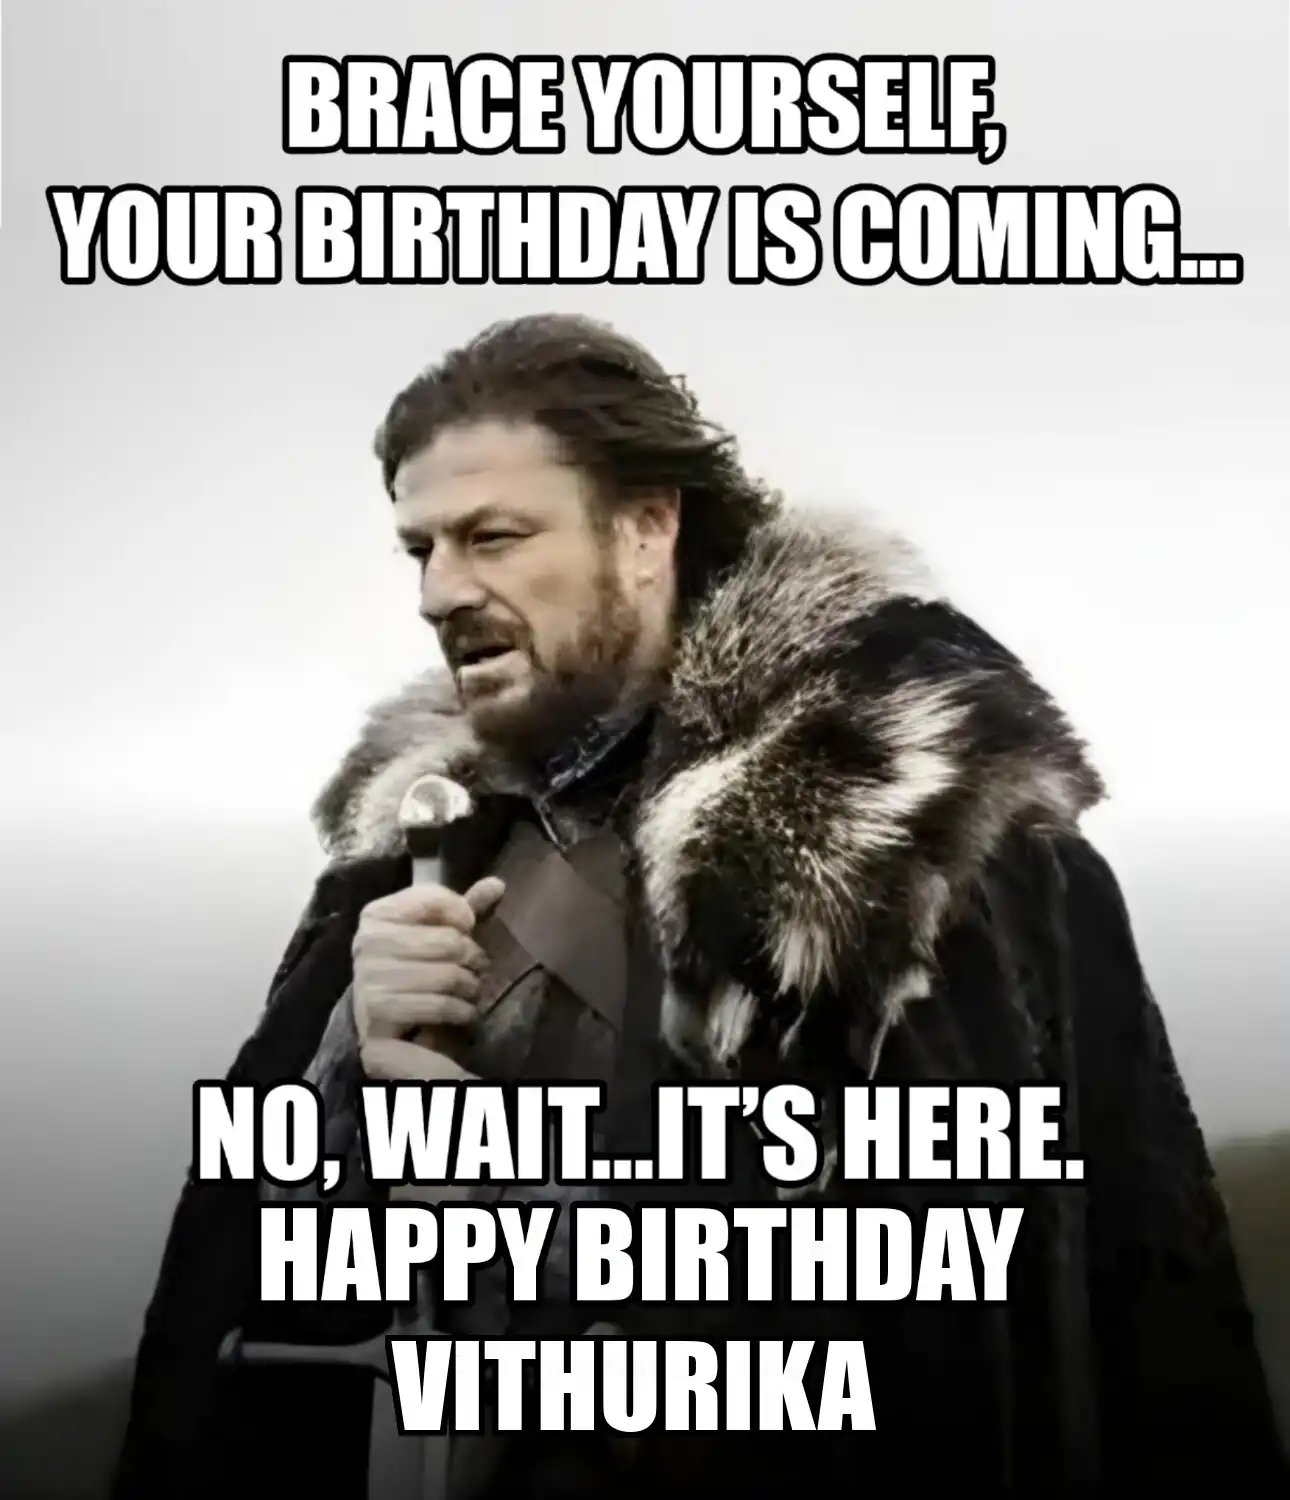 Happy Birthday Vithurika Brace Yourself Your Birthday Is Coming Meme